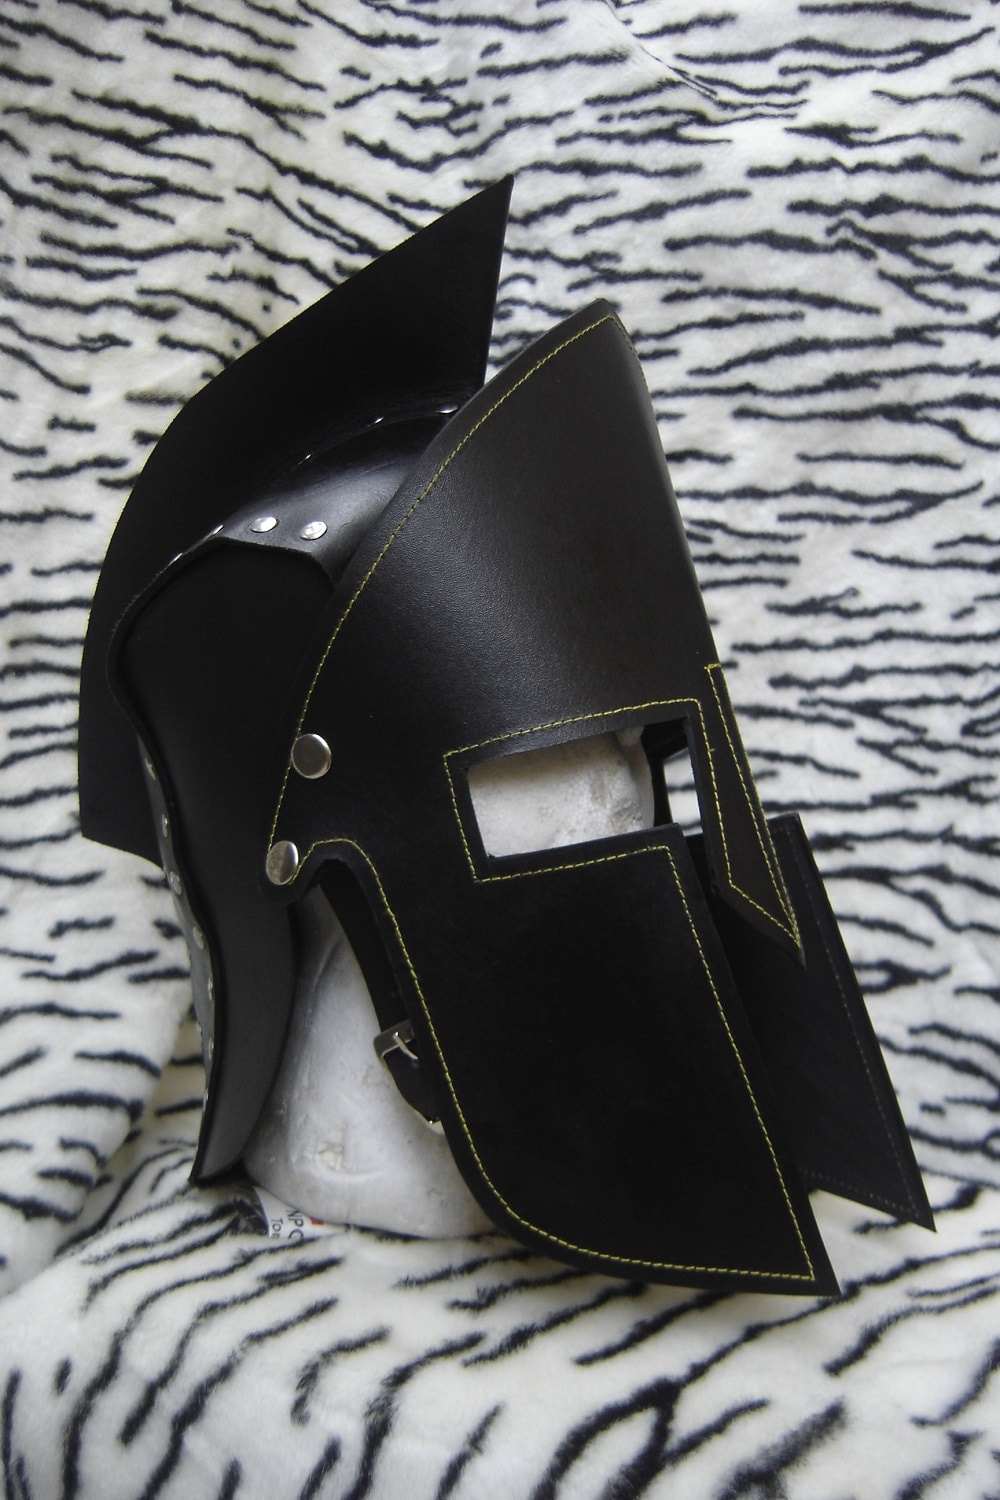 Real Leather Spartan Helmet Roman Armour Fantasy Knight Helmet | Etsy